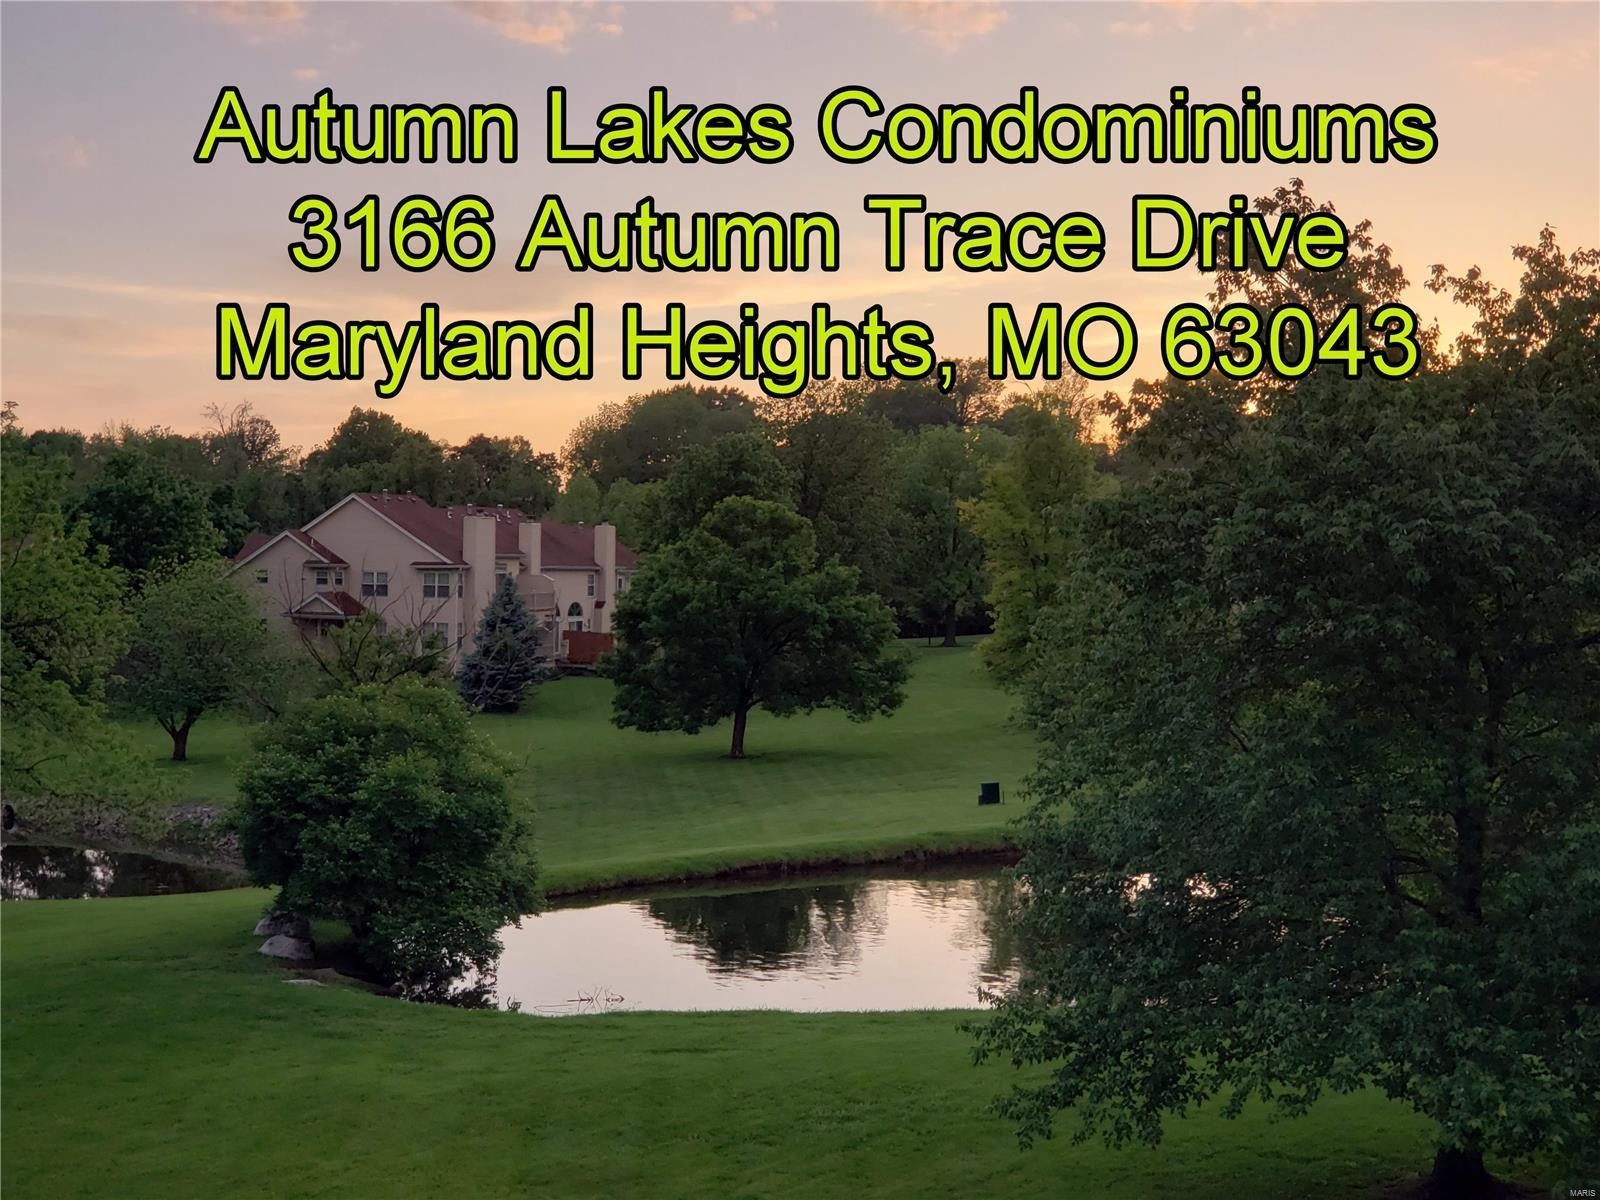 1. 3166 Autumn Trace Drive